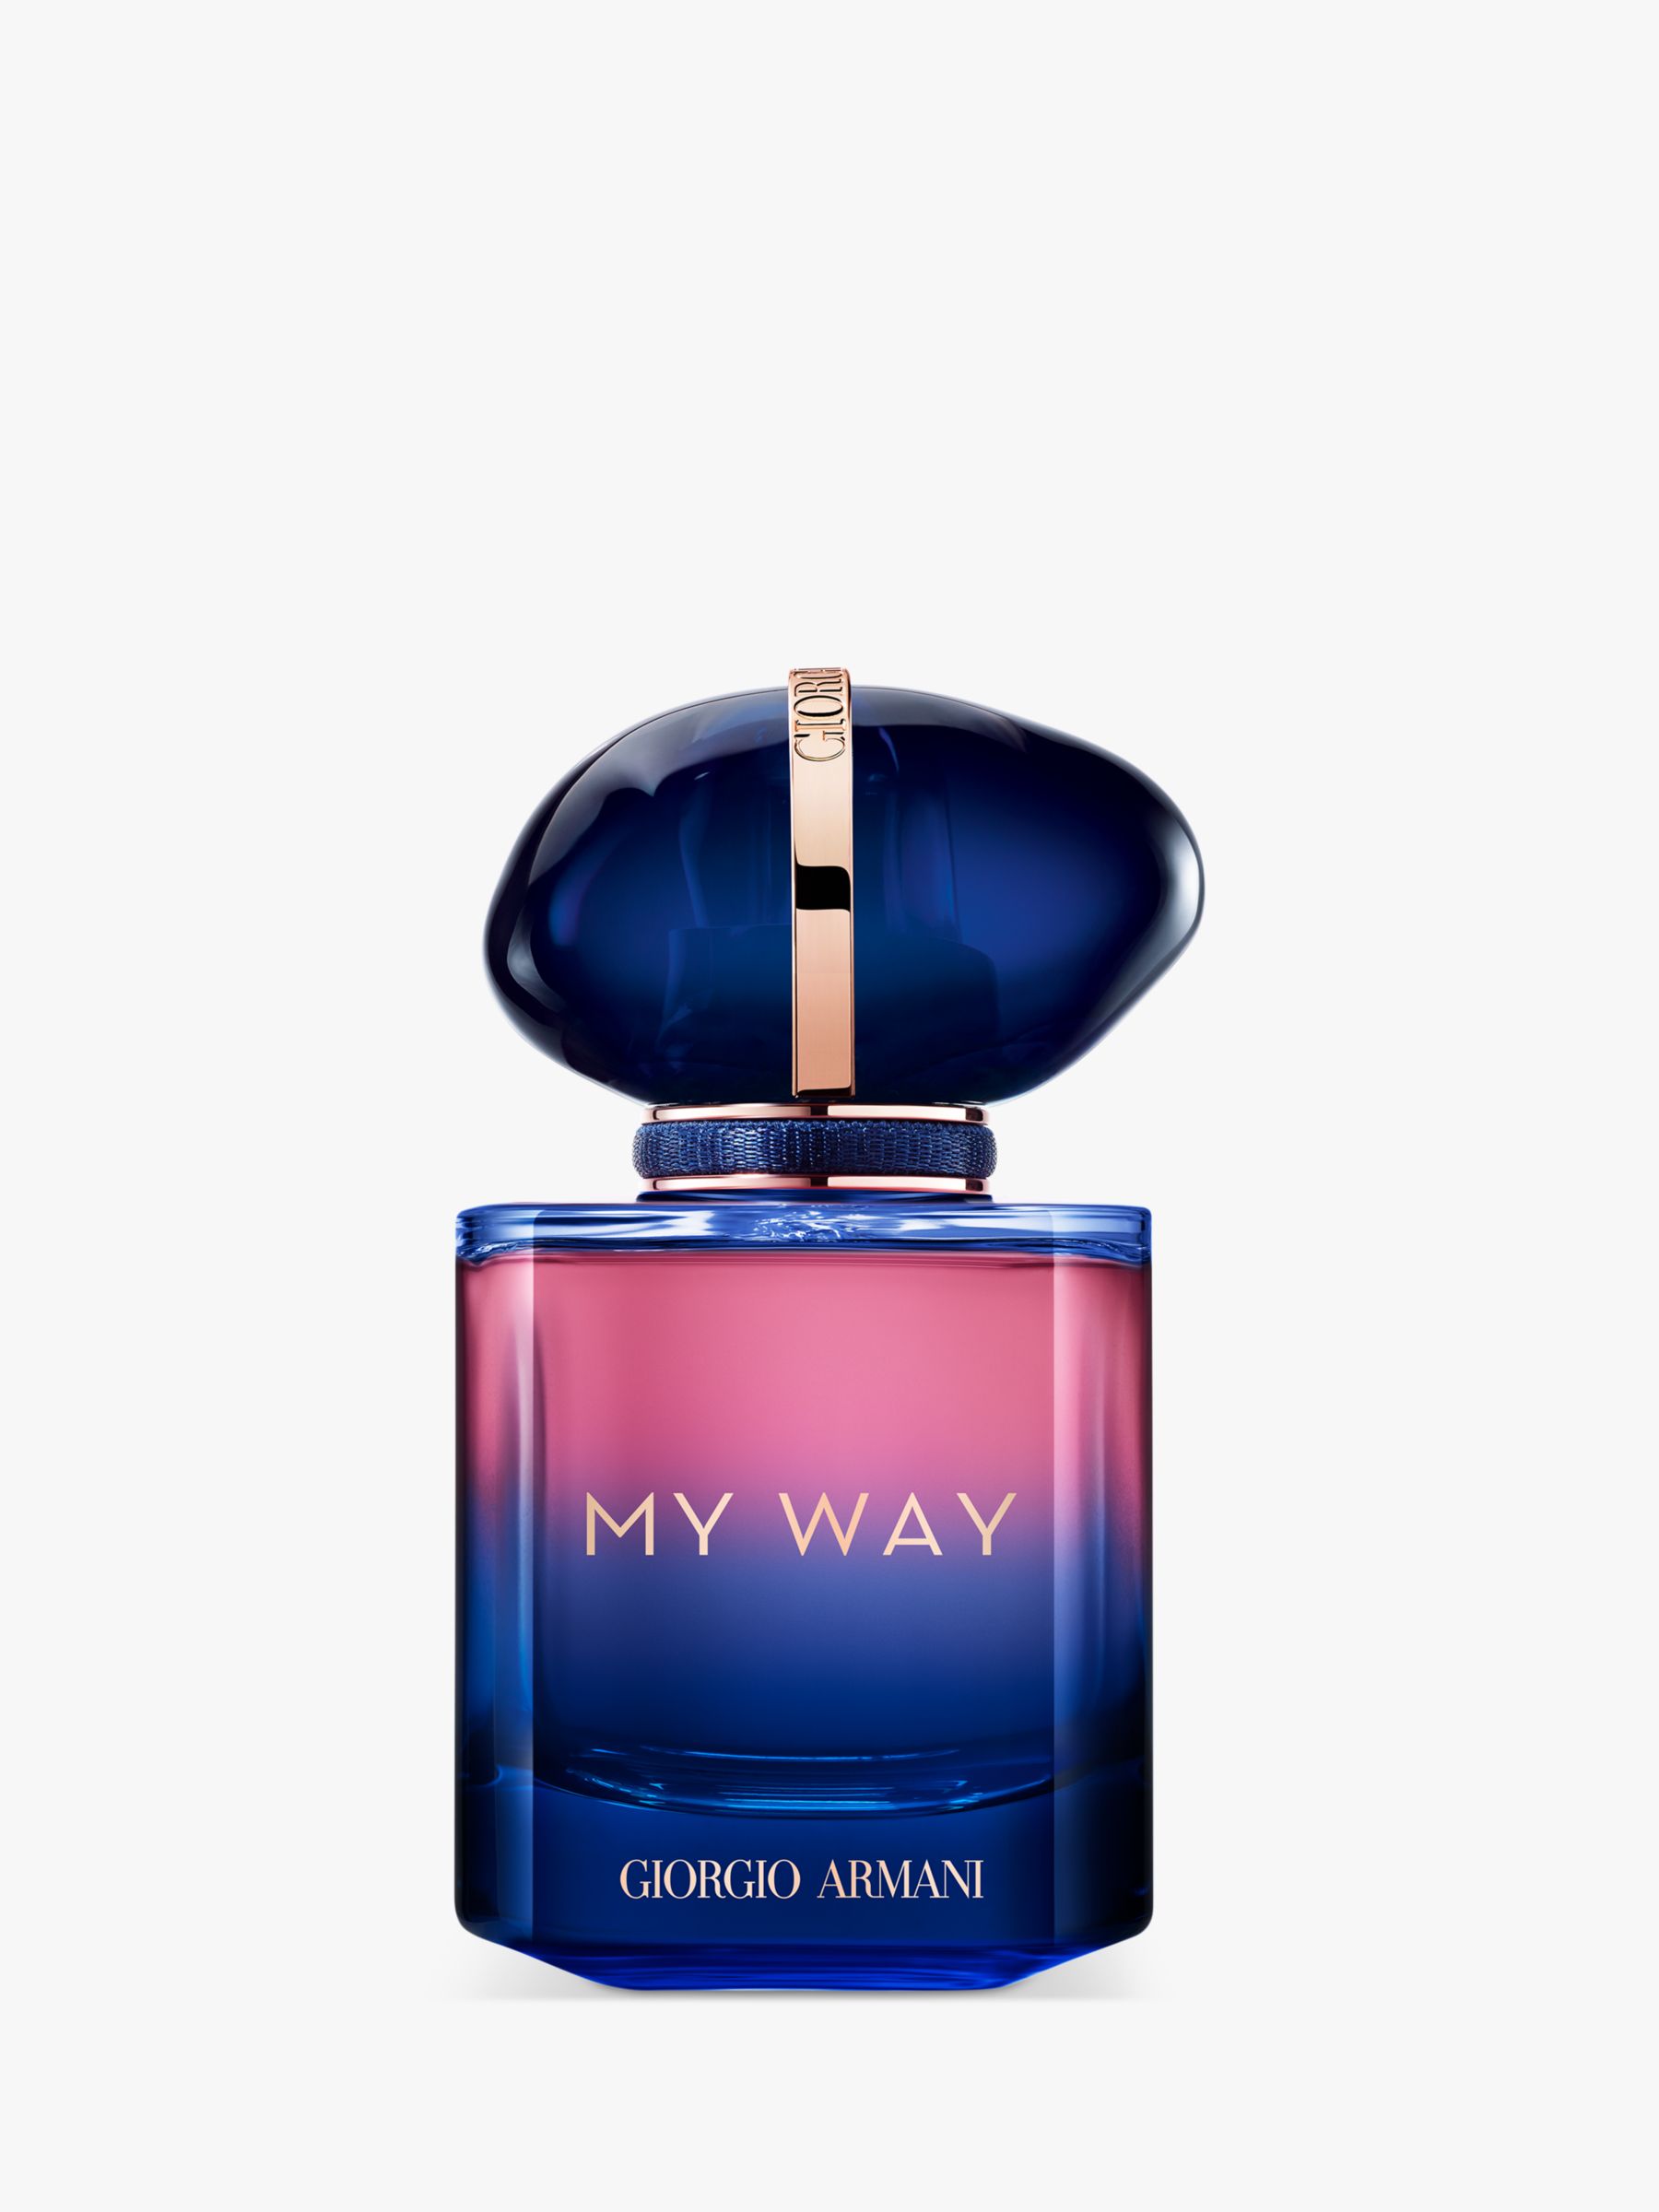 Giorgio Armani My Way Le Parfum Refillable, 30ml 1